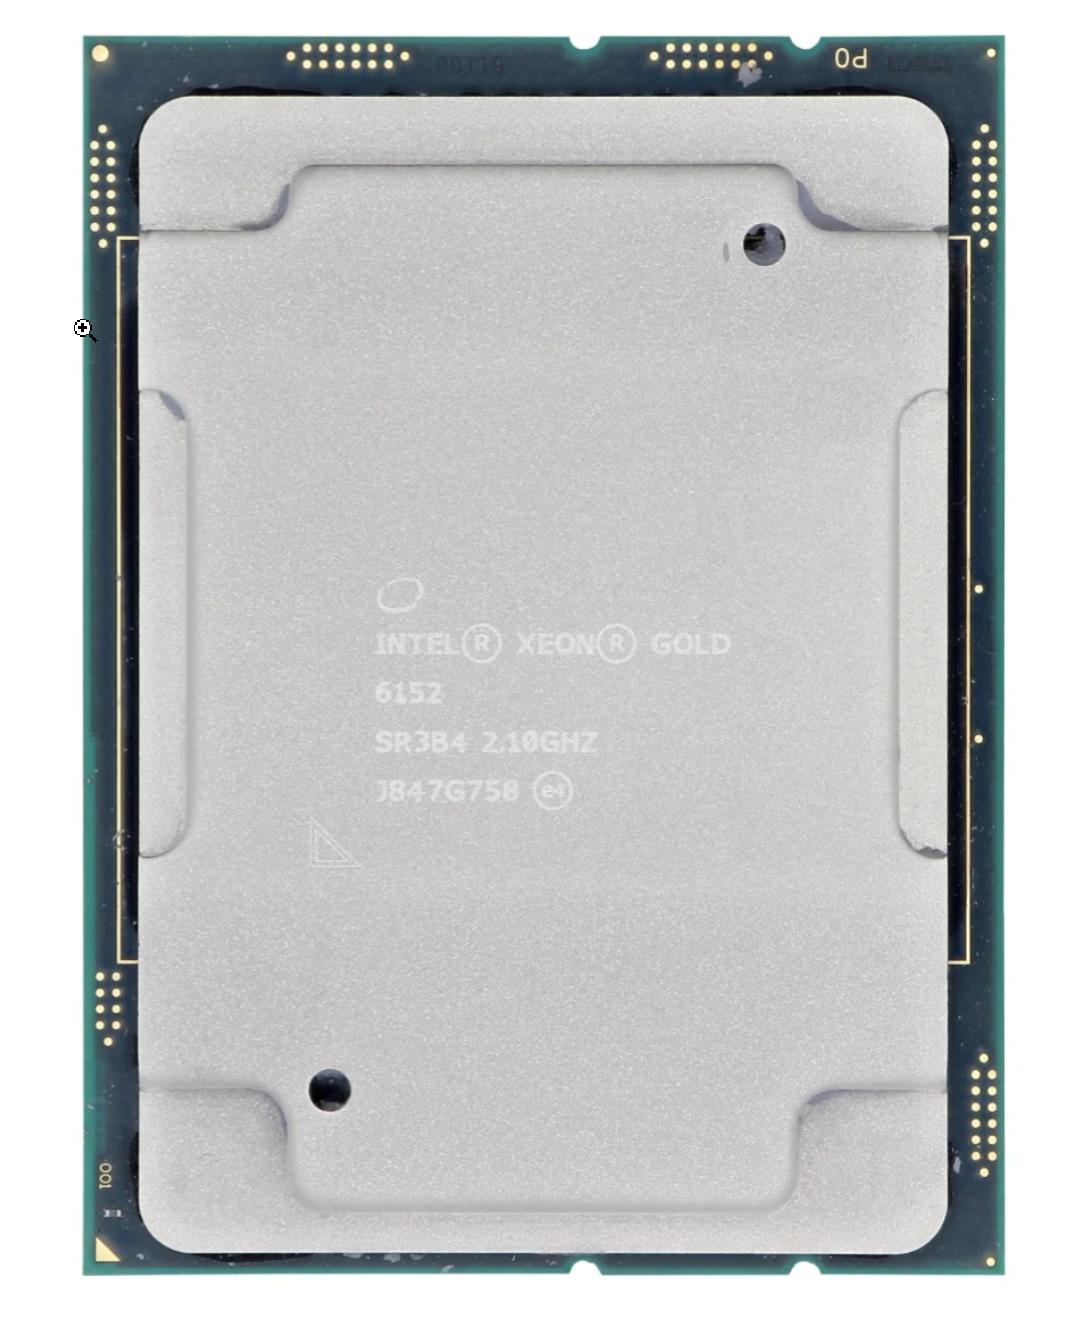 Intel® Xeon Gold 6152 Processor / İşlemci